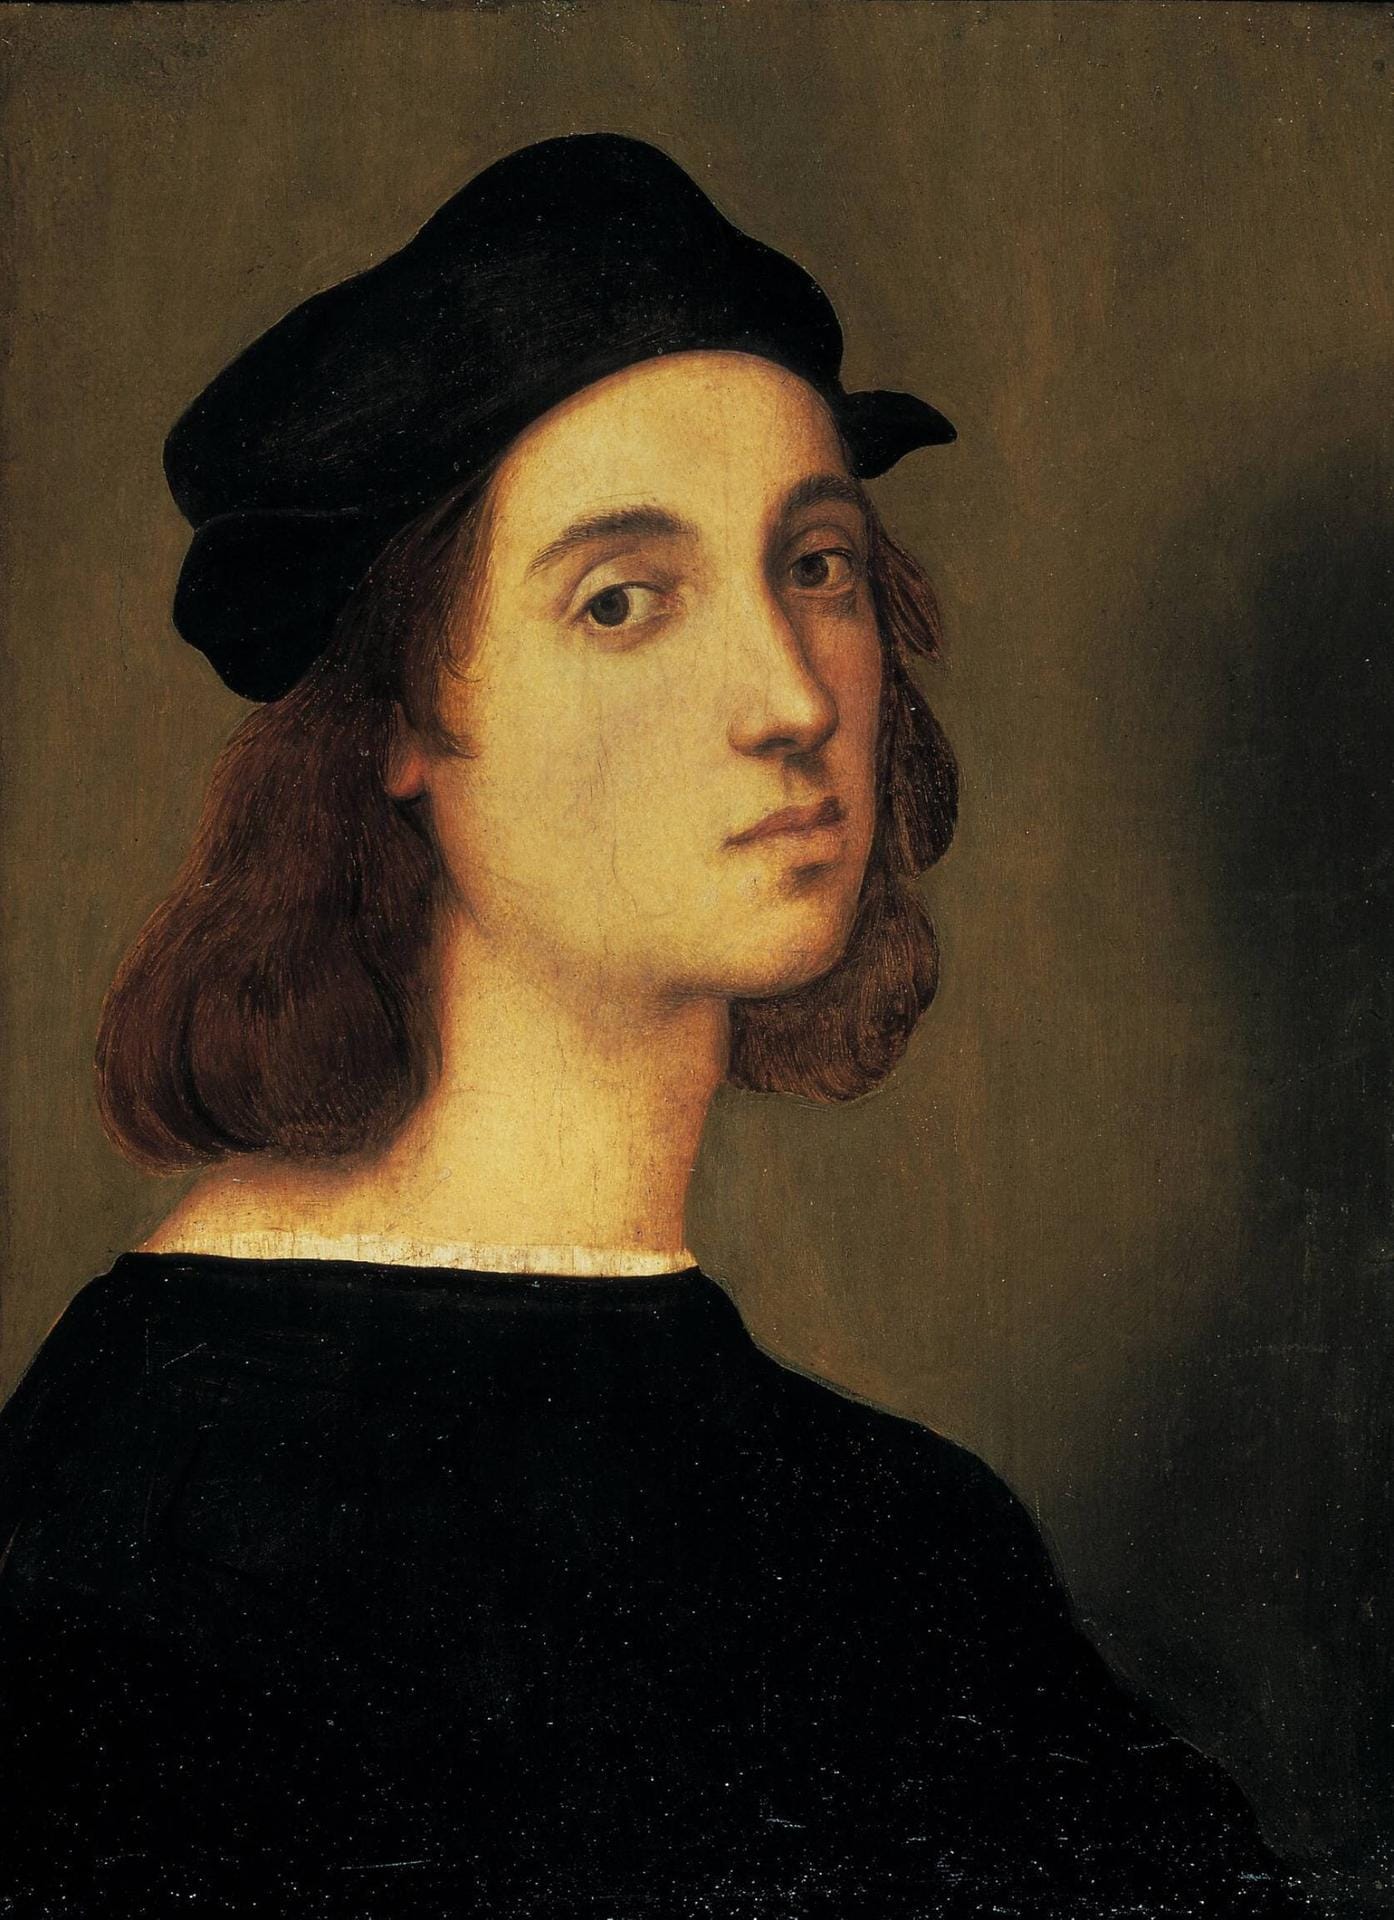 Selbstporträt, 1505/1506, 45 x 33 cm, Öl auf Holz, Galleria degli Uffizi, Florenz